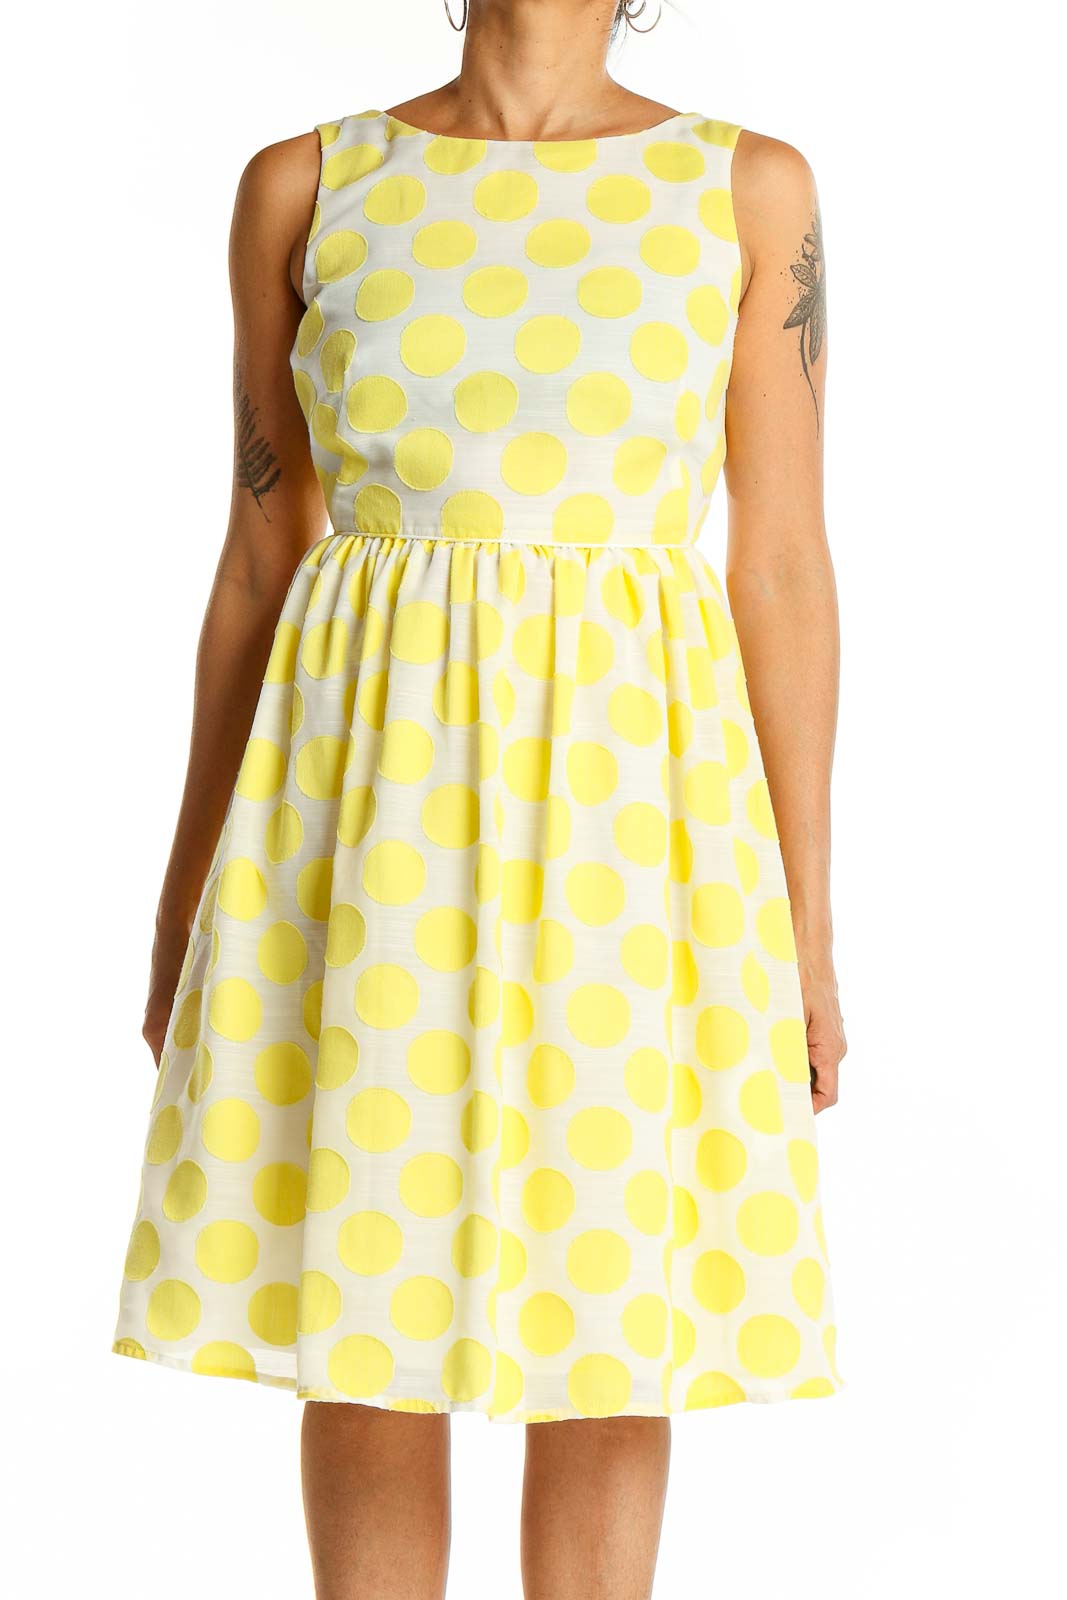 Yellow Flare Polka Dot Dress Front